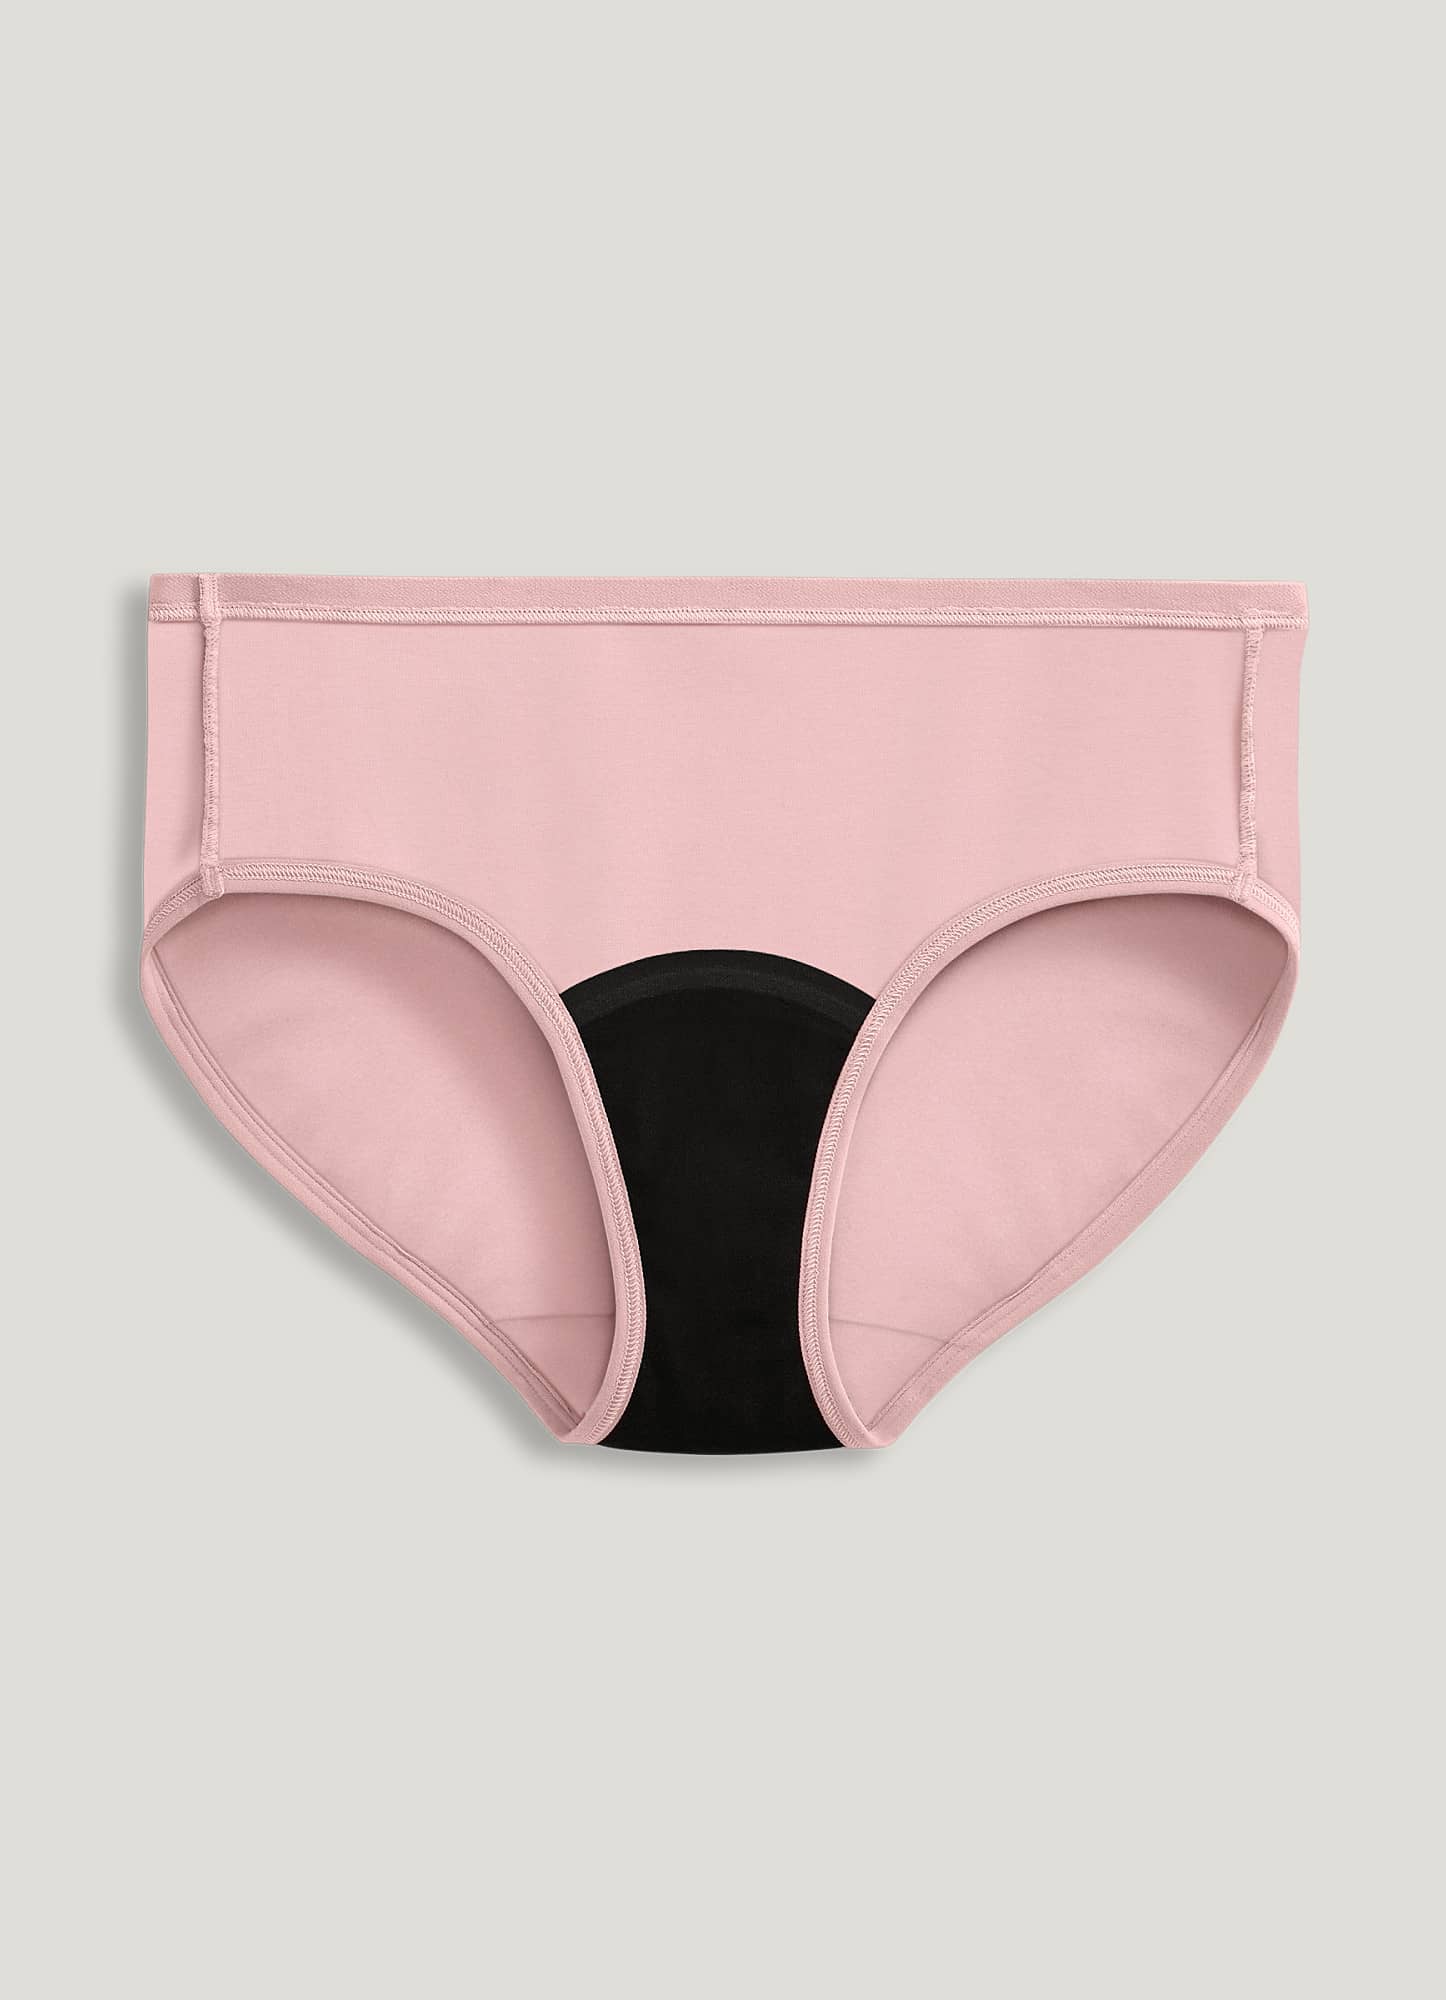 Jockey Worry Free Period Underwear Thong Cotton stretch 3xl Tan 2586